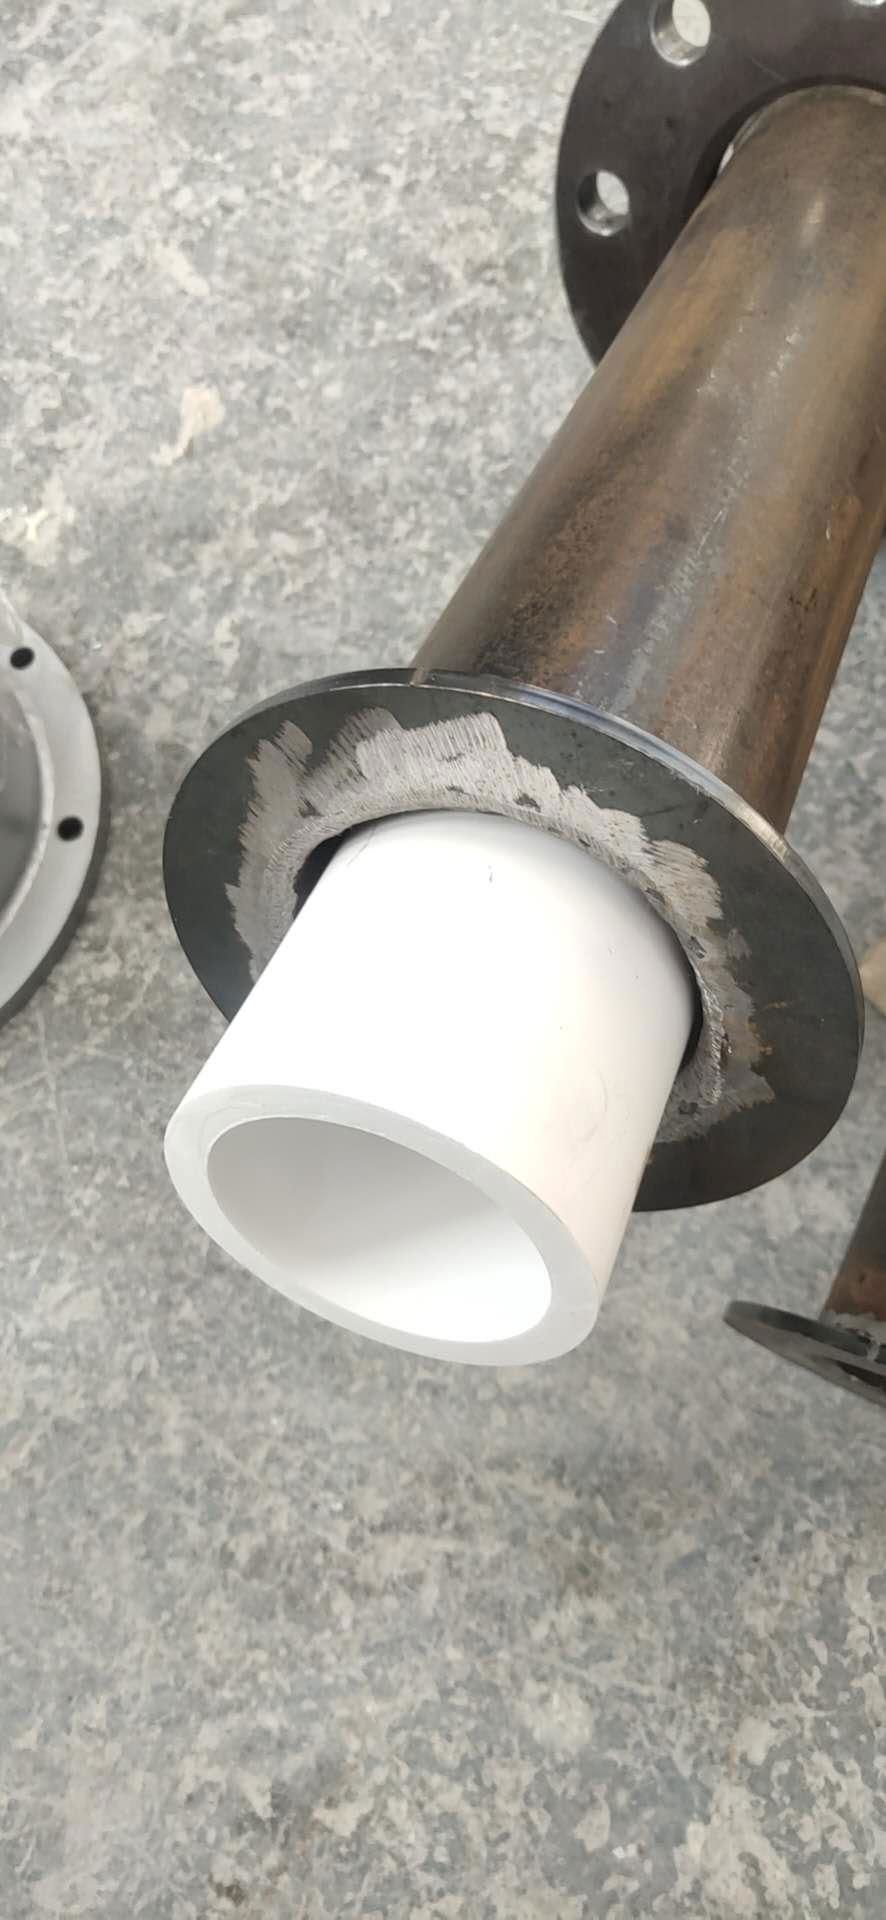 Corundum wear resistant ceramic lining wear resistant pipe elbow tee